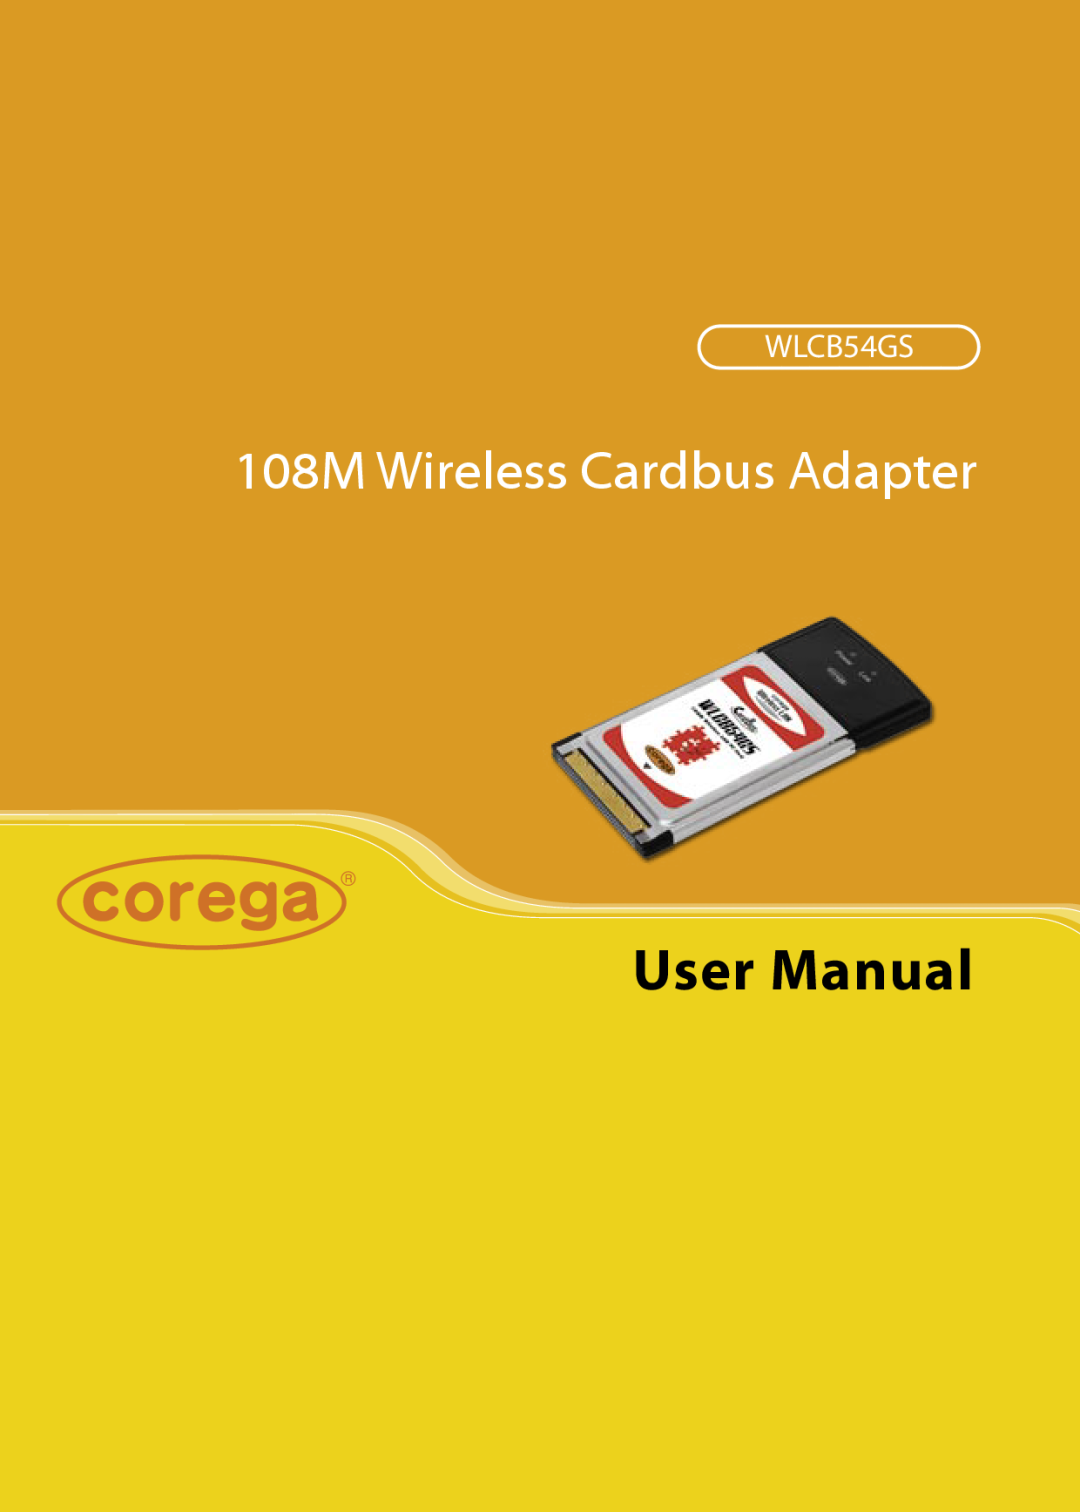 Corega user manual User Manual, 108M Wireless Cardbus Adapter, WLCB54GS 